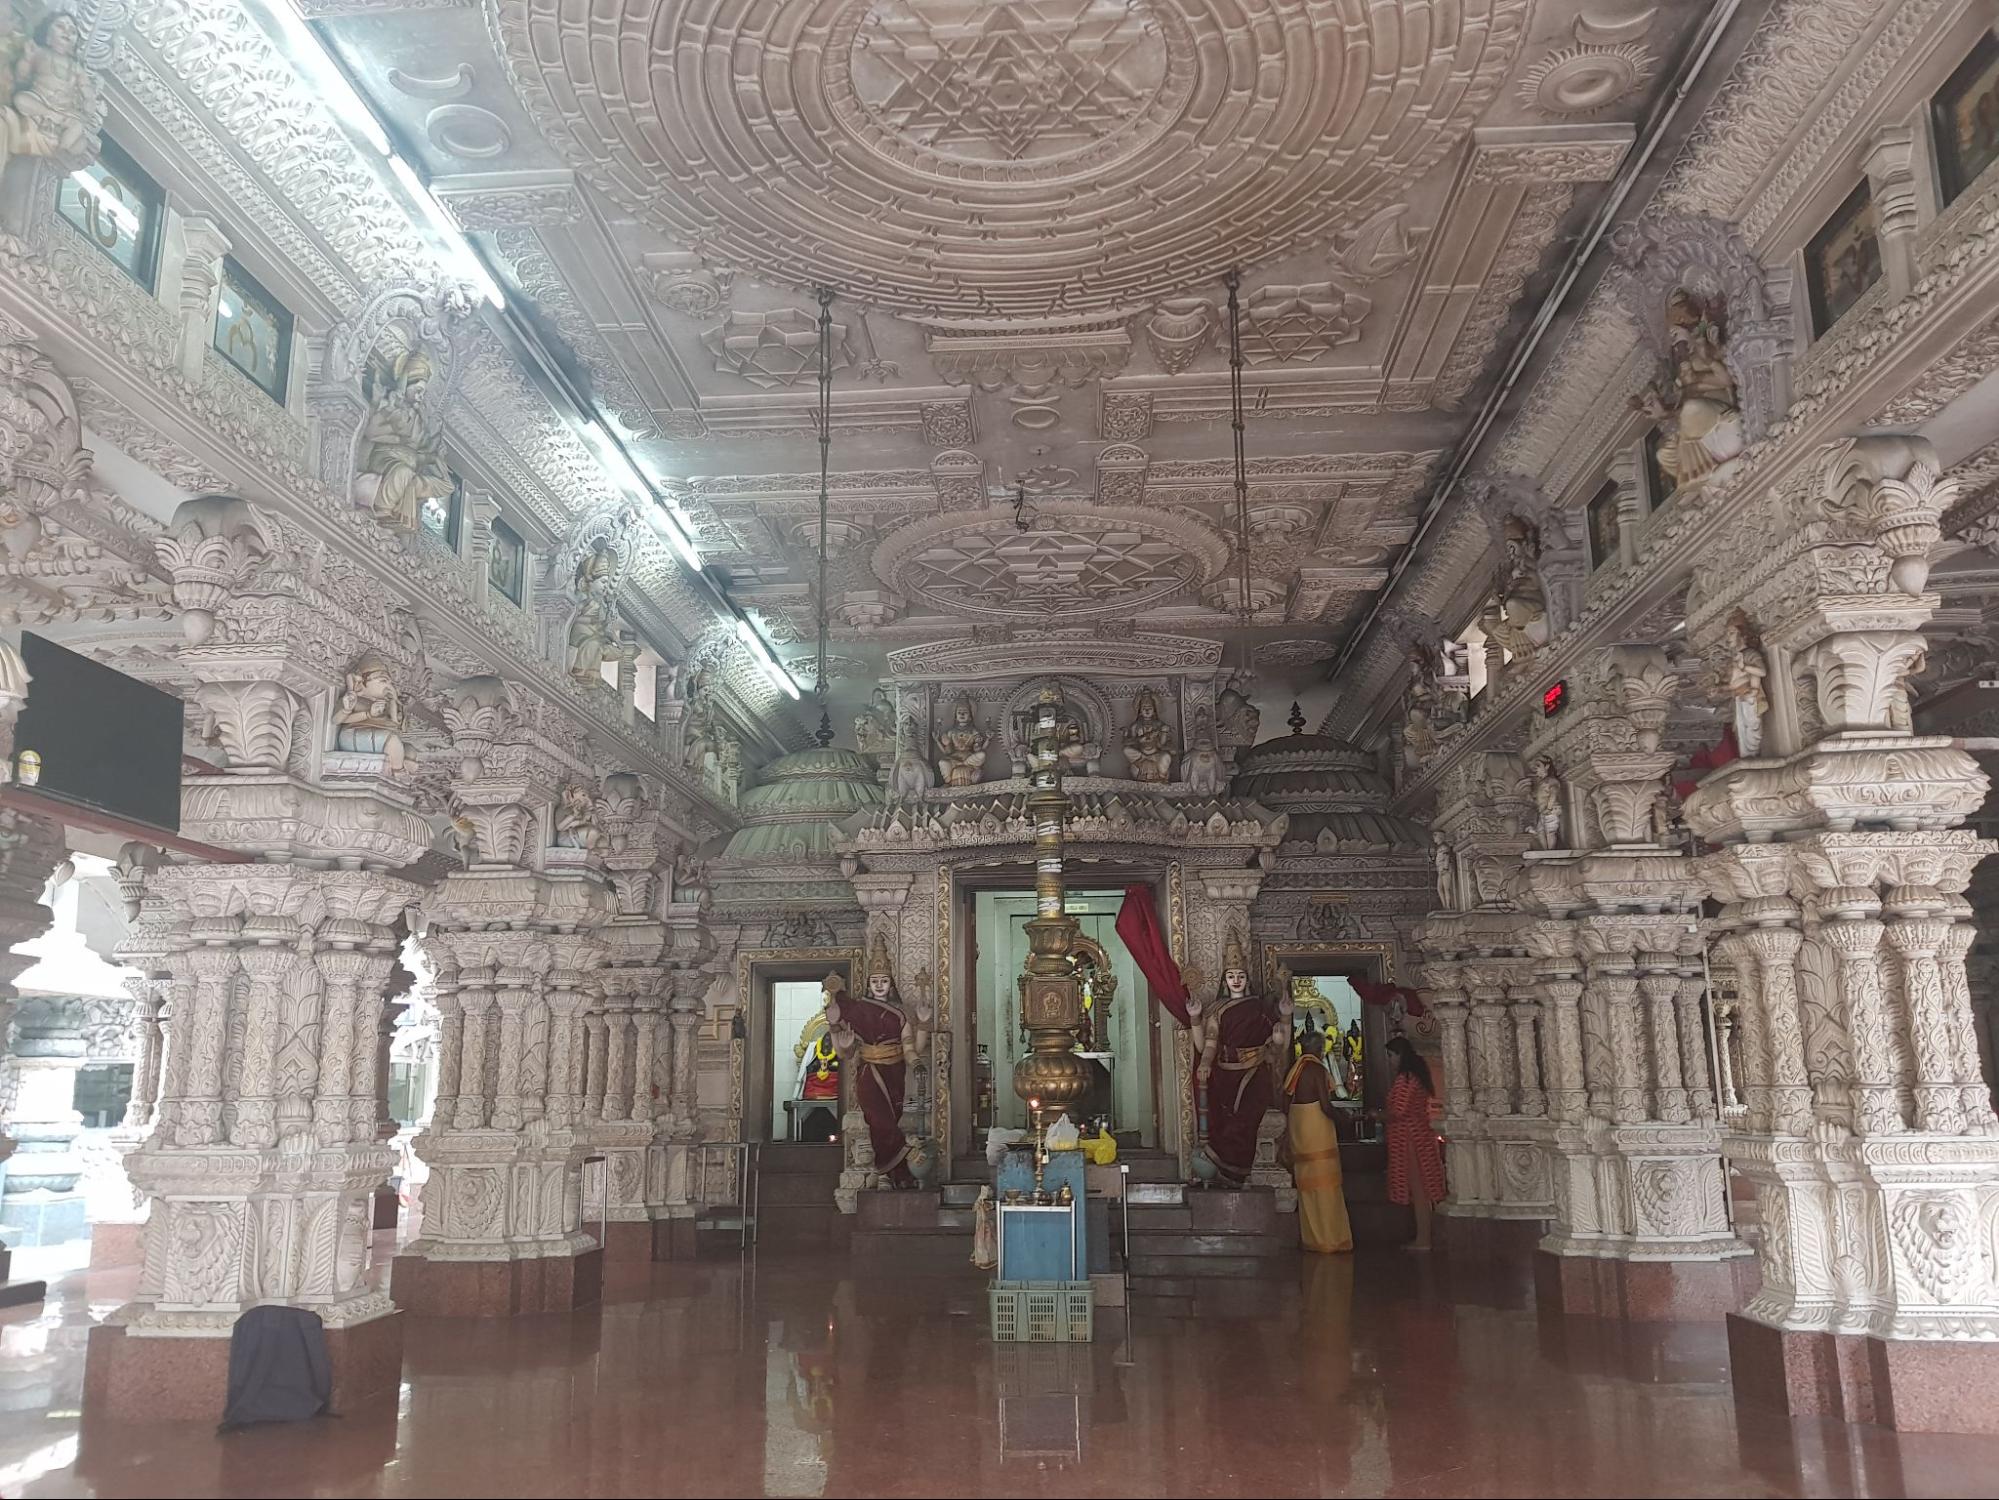 Indian temple interior design and architecture